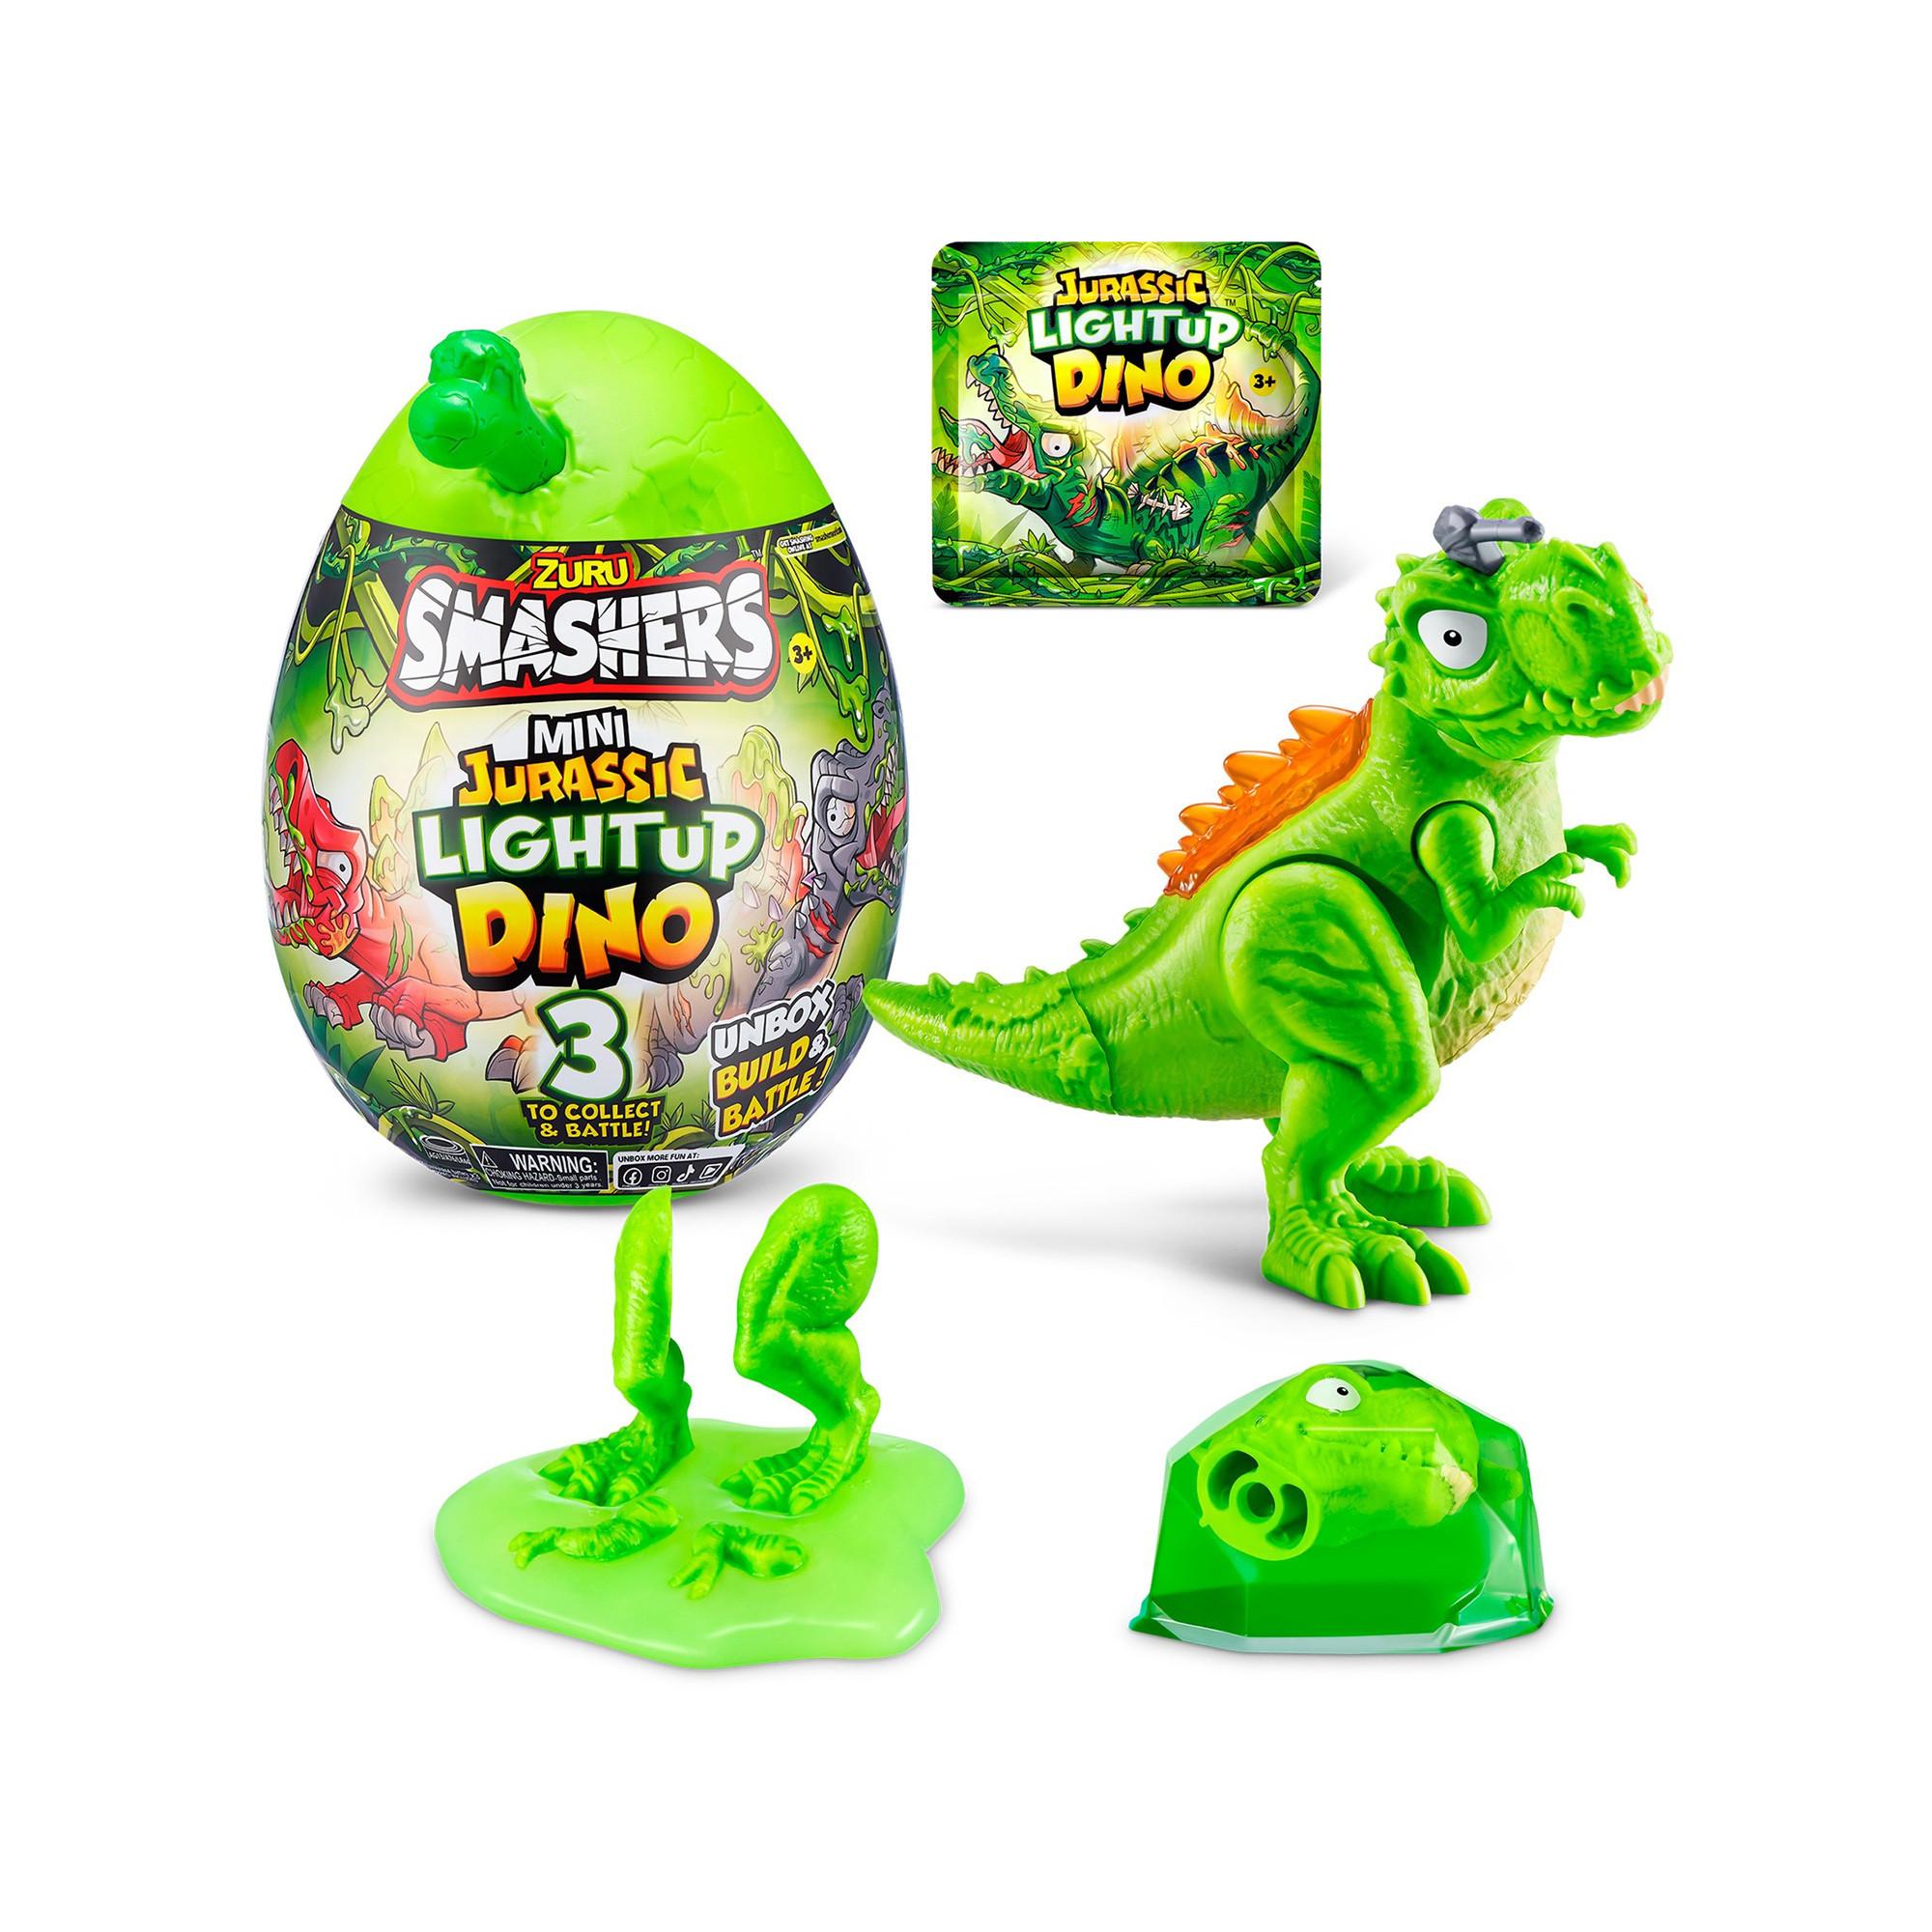 ZURU  Smashers Mini Egg Light Up Dino, Zufallsauswahl 